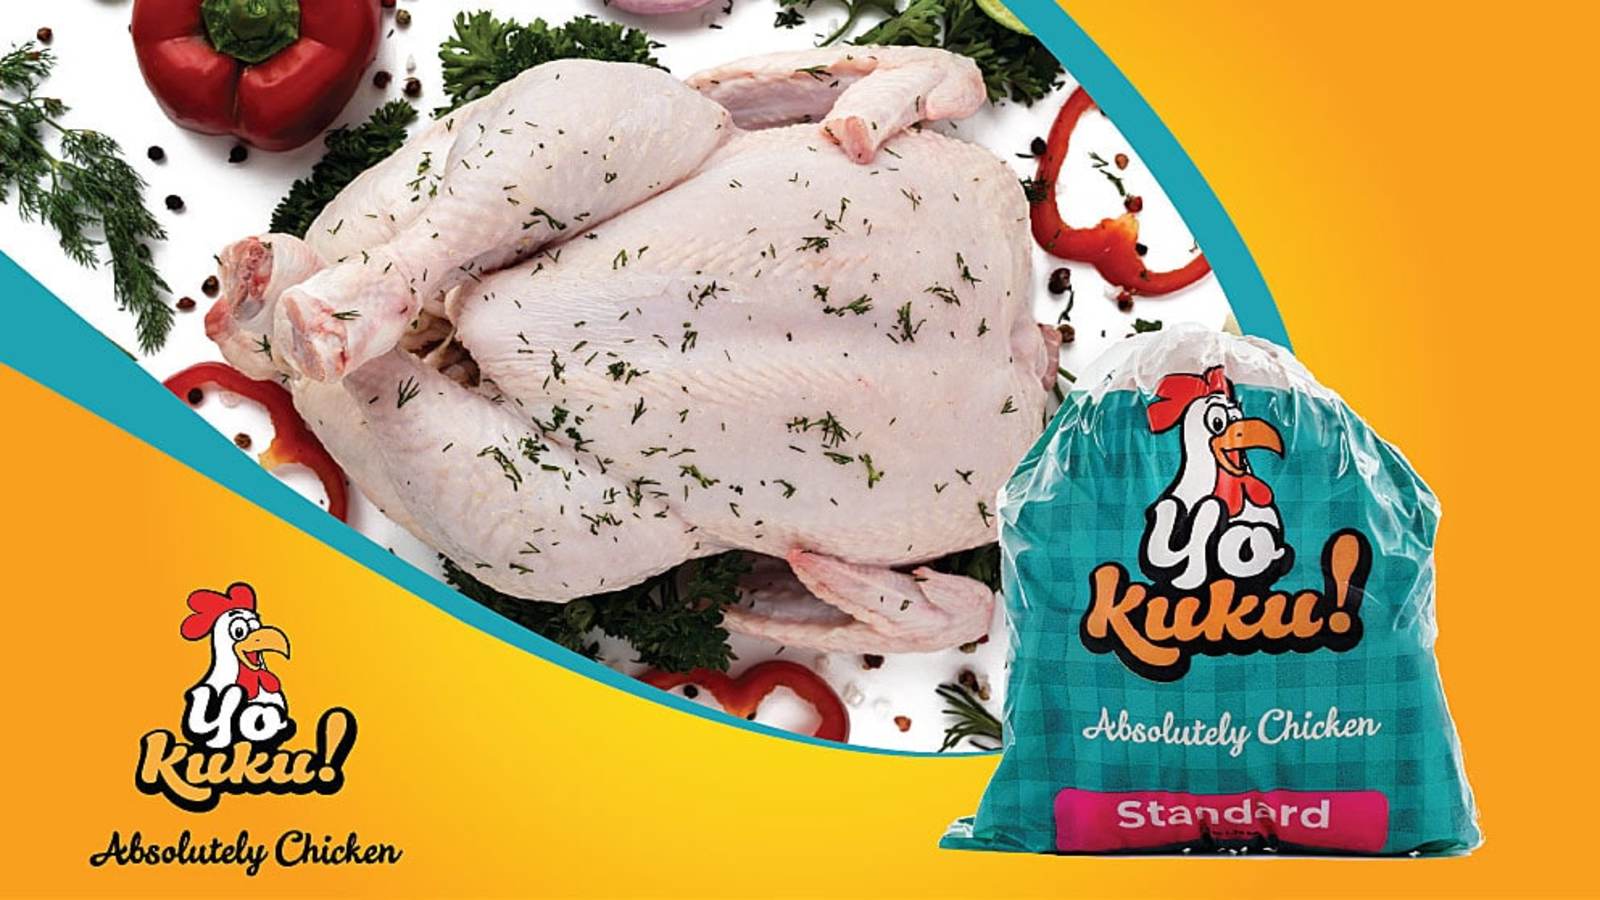 Ugandan Yo Kuku chicken brand owner to bag US$7m from IFC to spearhead expansion plan